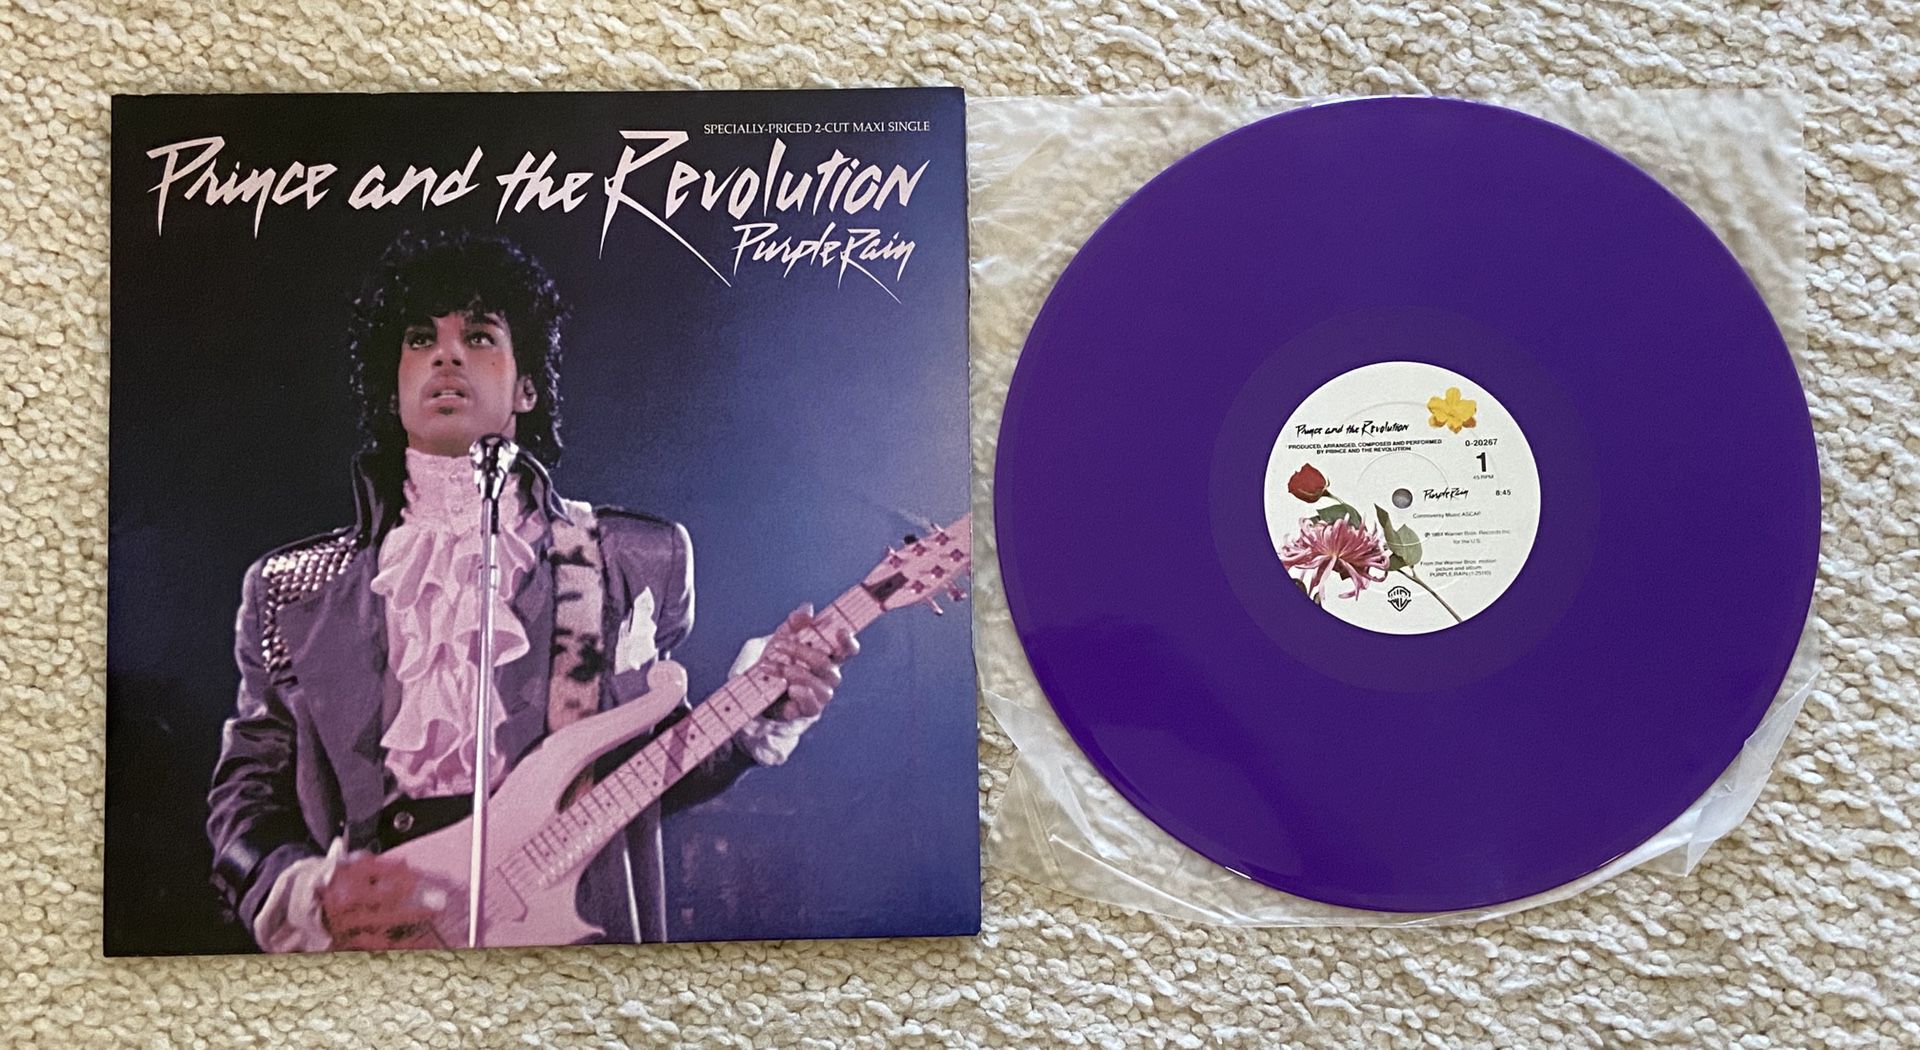 Prince and The Revolution “Purple Rain” vinyl 12” Limited Edition Purple vinyl 1984 Warner Records Original Pressing gorgeous like new pristine colle